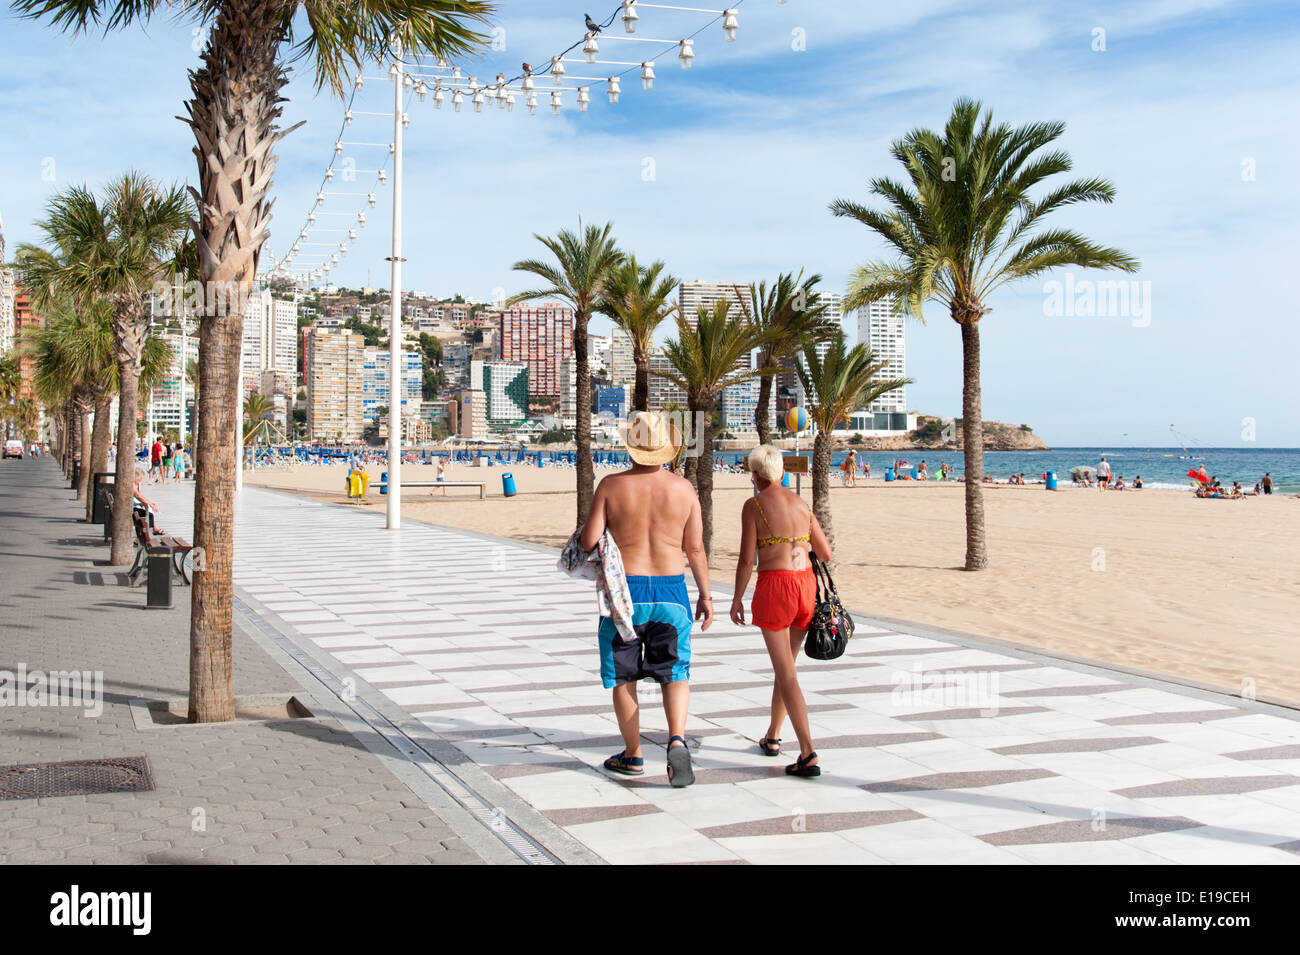 British tourists strolling along the promenade, Benidorm, Costa Blanca, Spain Stock Photo